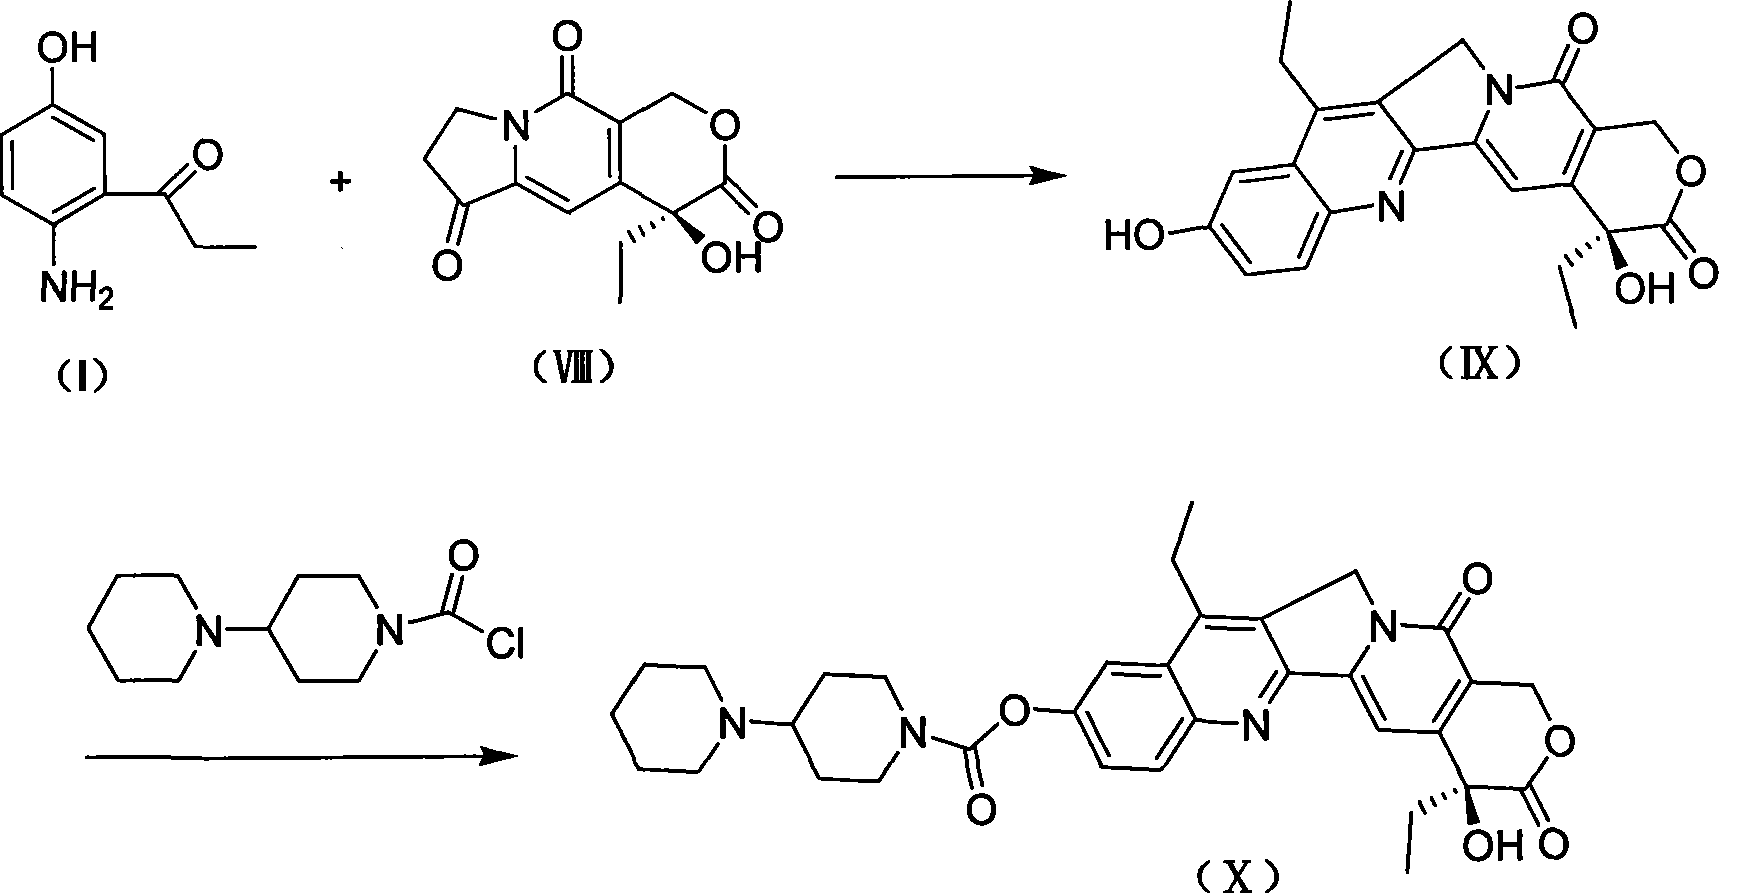 2-amino-5-hydroxypropiophenone preparation method